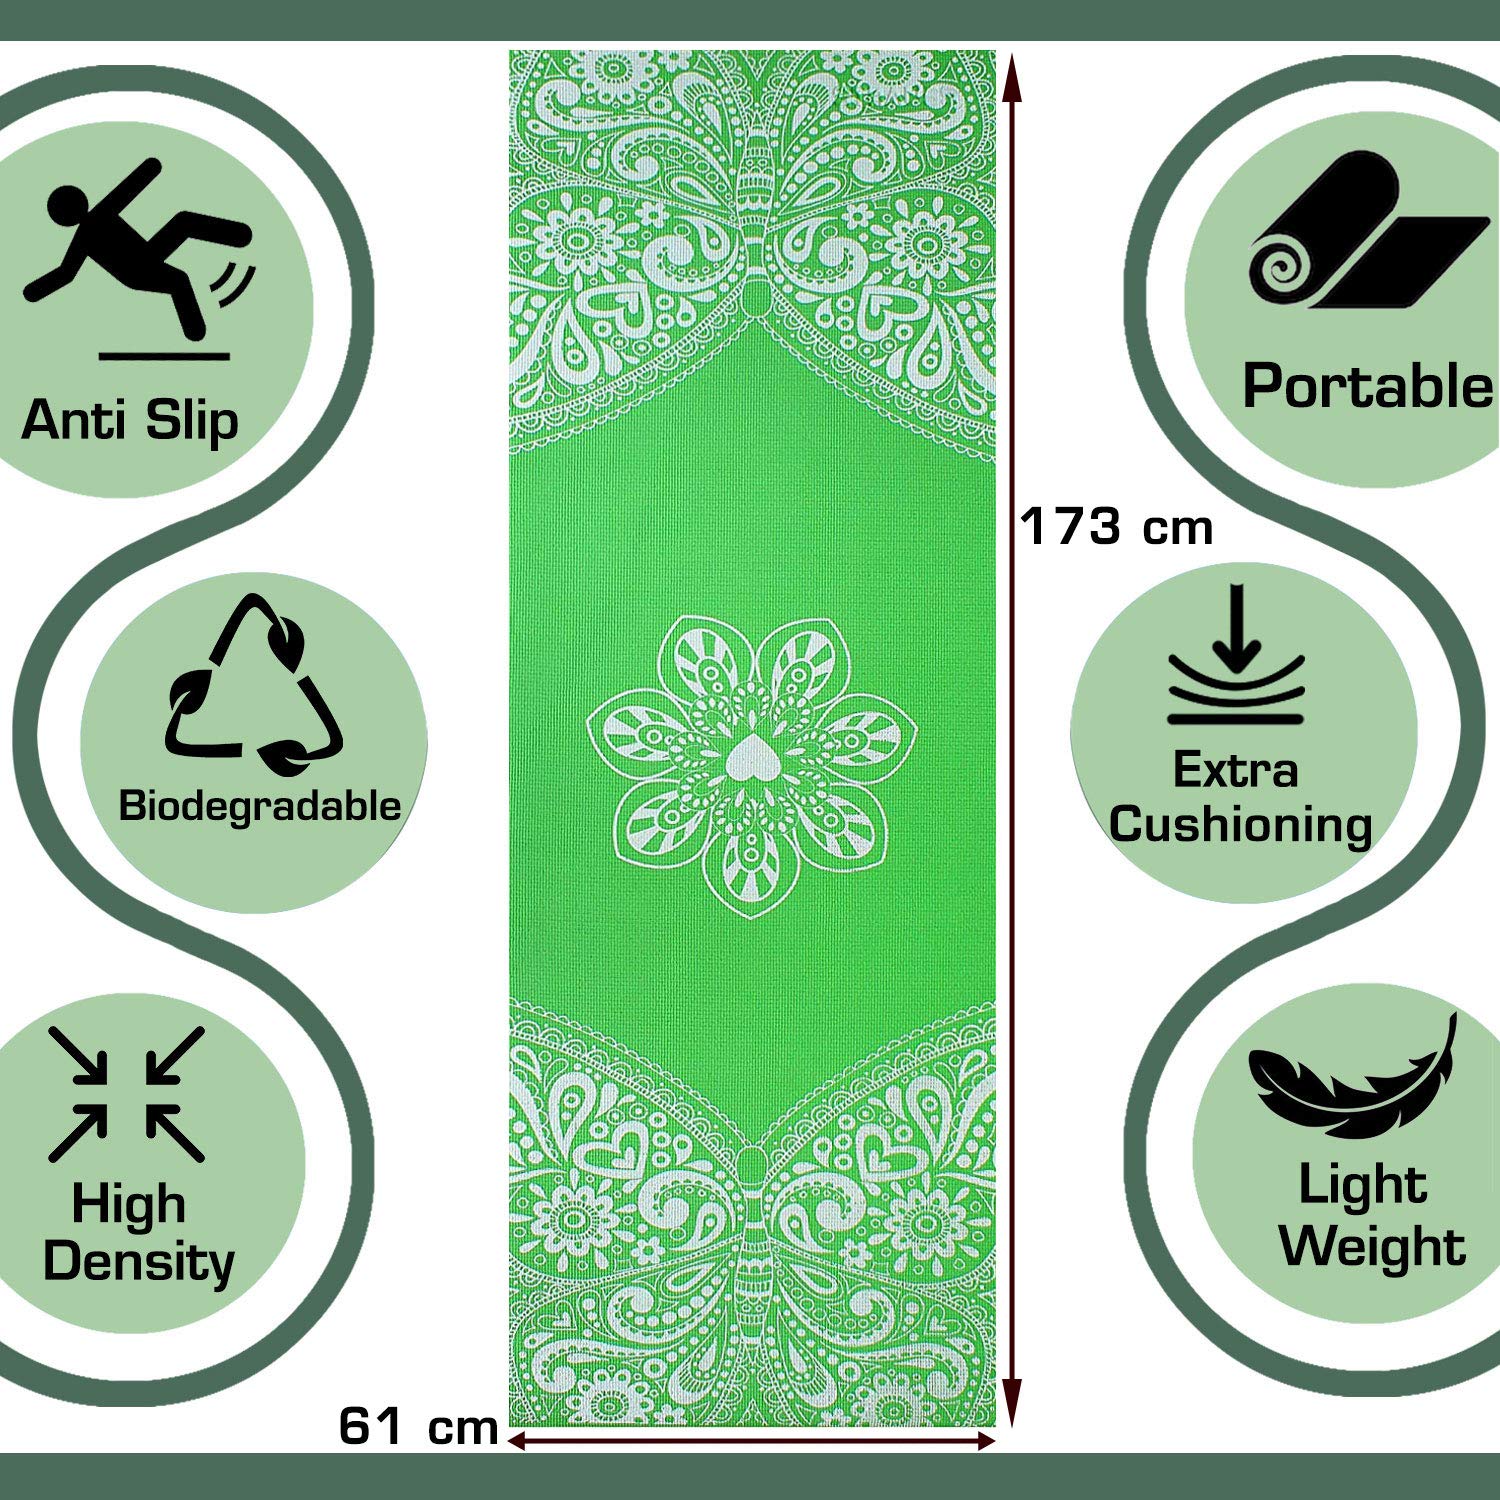 Strauss Meditation Butterfly Yoga Mat, 5 mm, (Green), Yoga Block (Green), Pair, Anti-Microbial Sports Cooling Towel(Grey) and Yoga Belt, 8 Feet, (Blue)